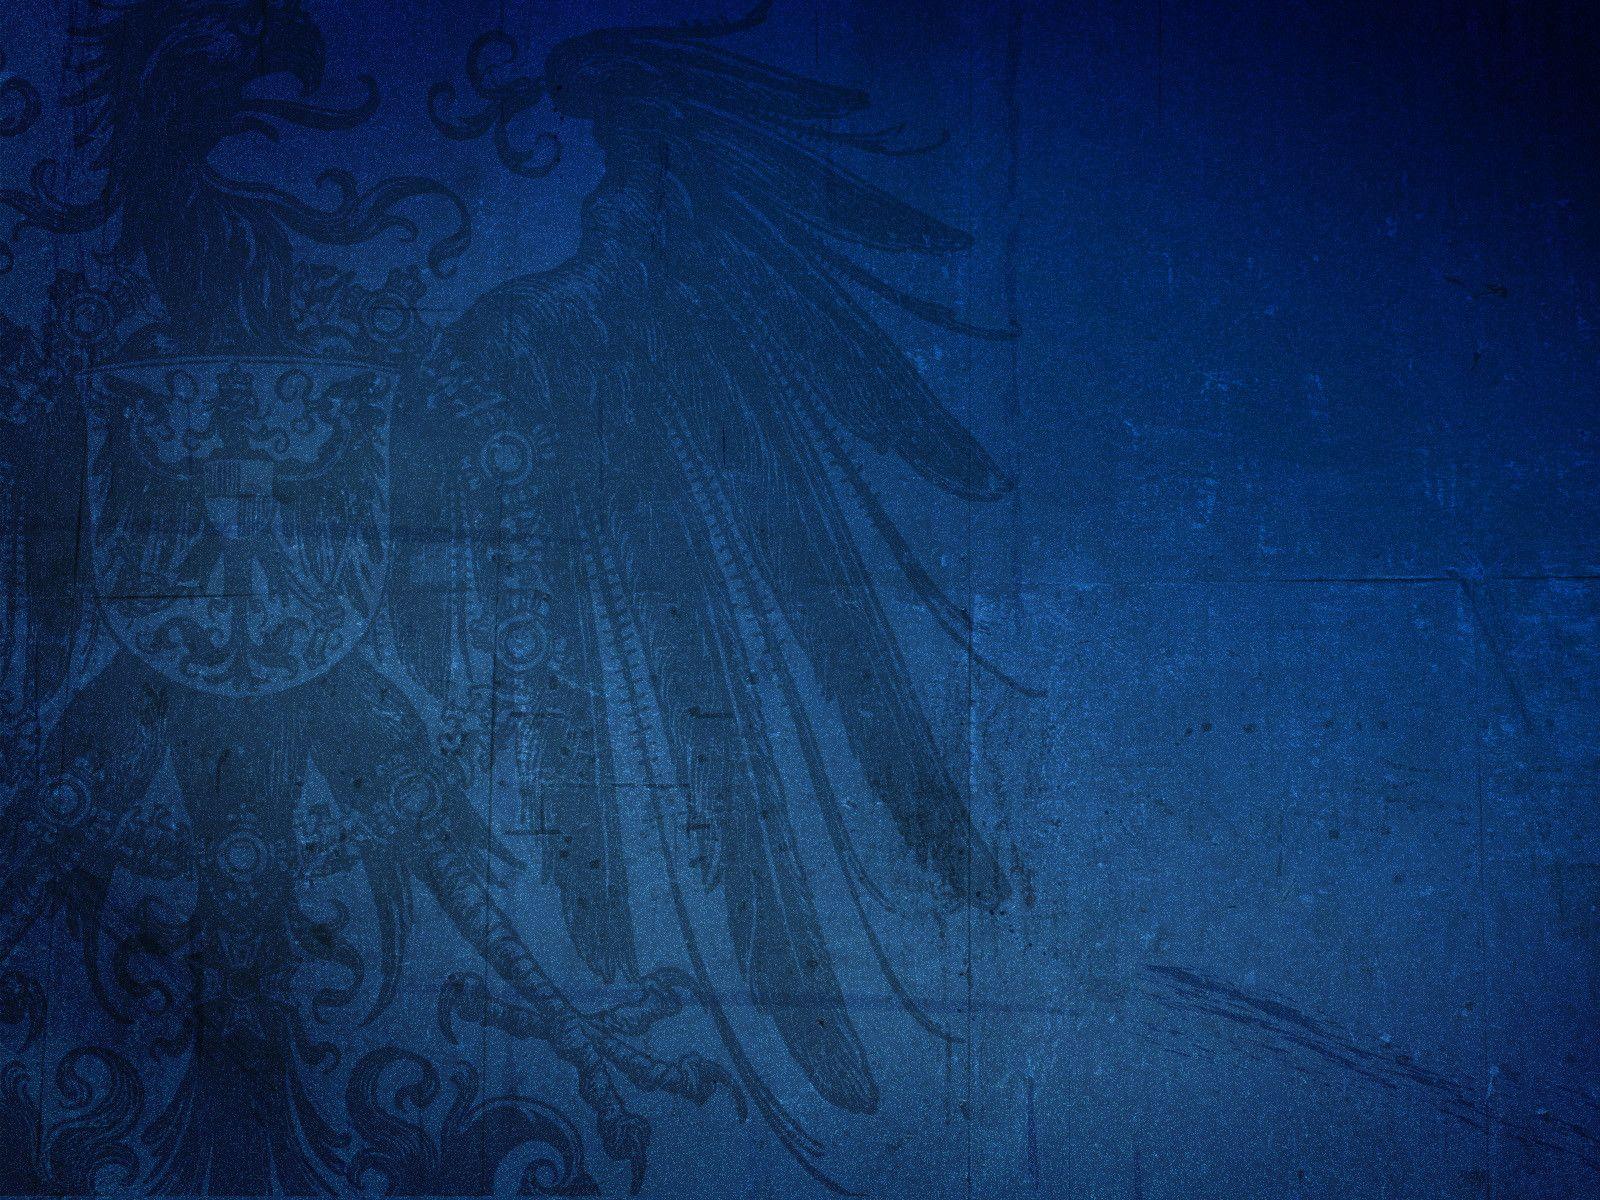 waspwednesday: Blue Wallpaper